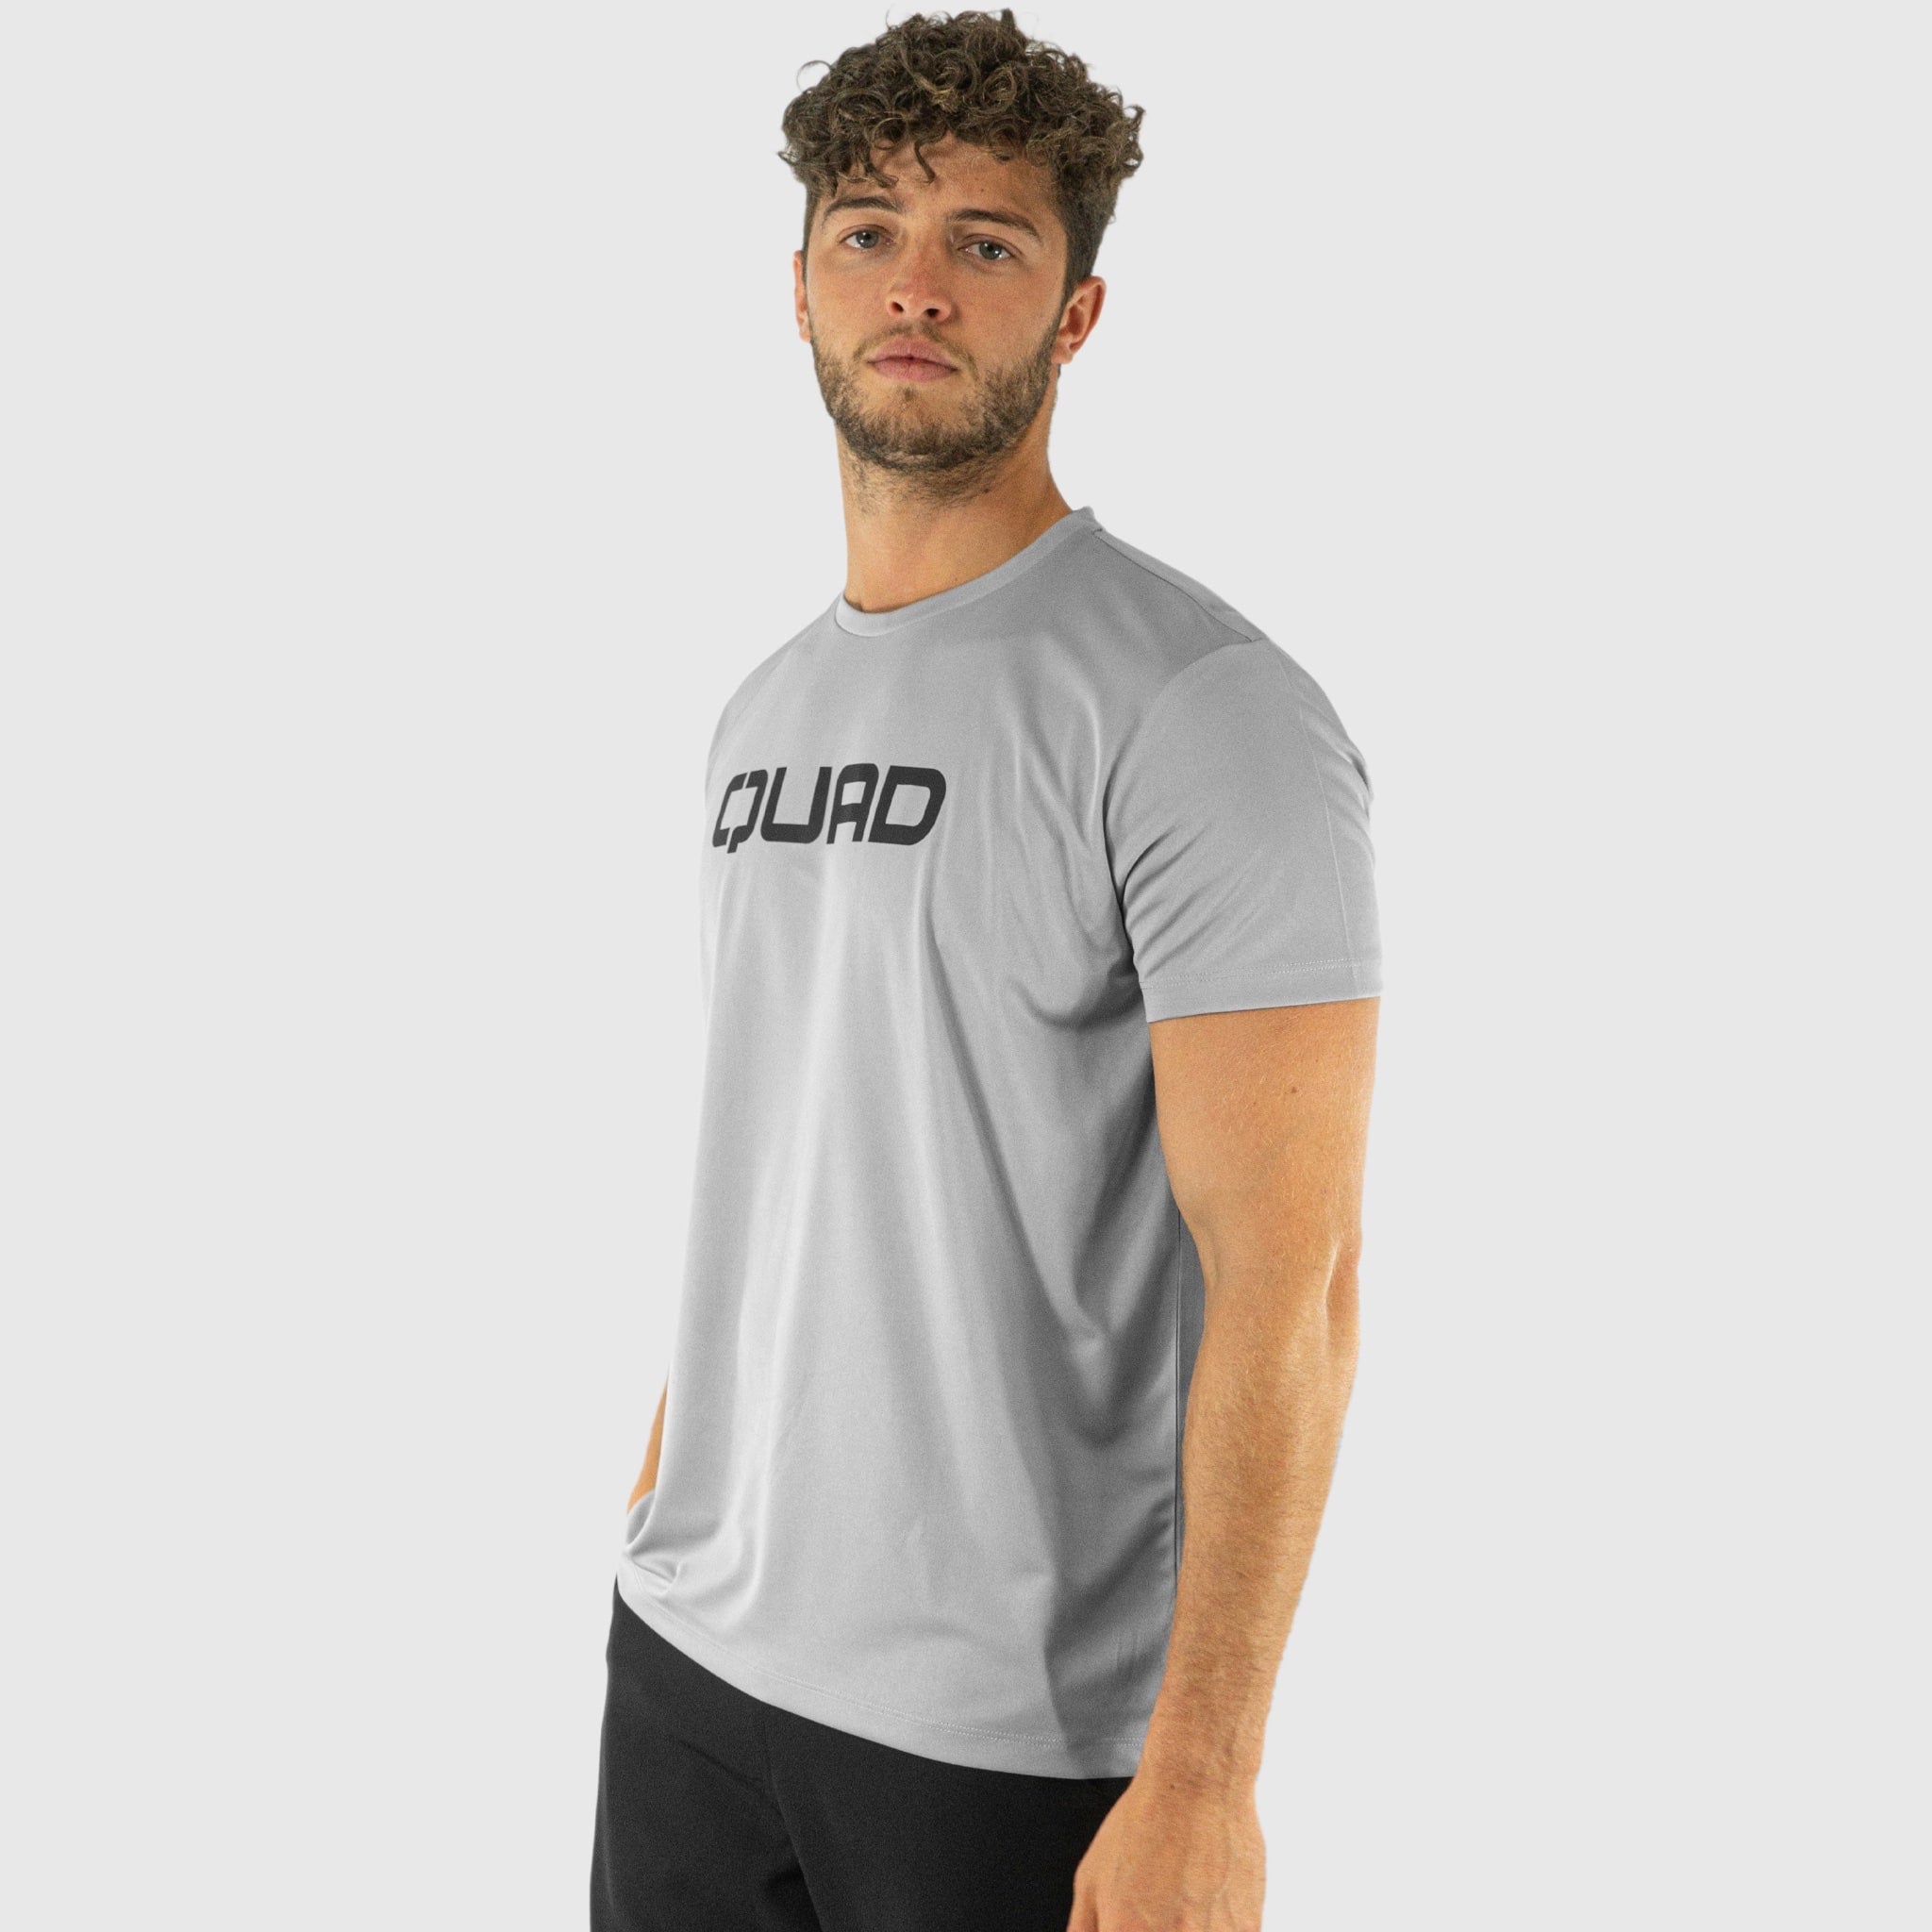 Quad Padel Essential T-Shirt grey side